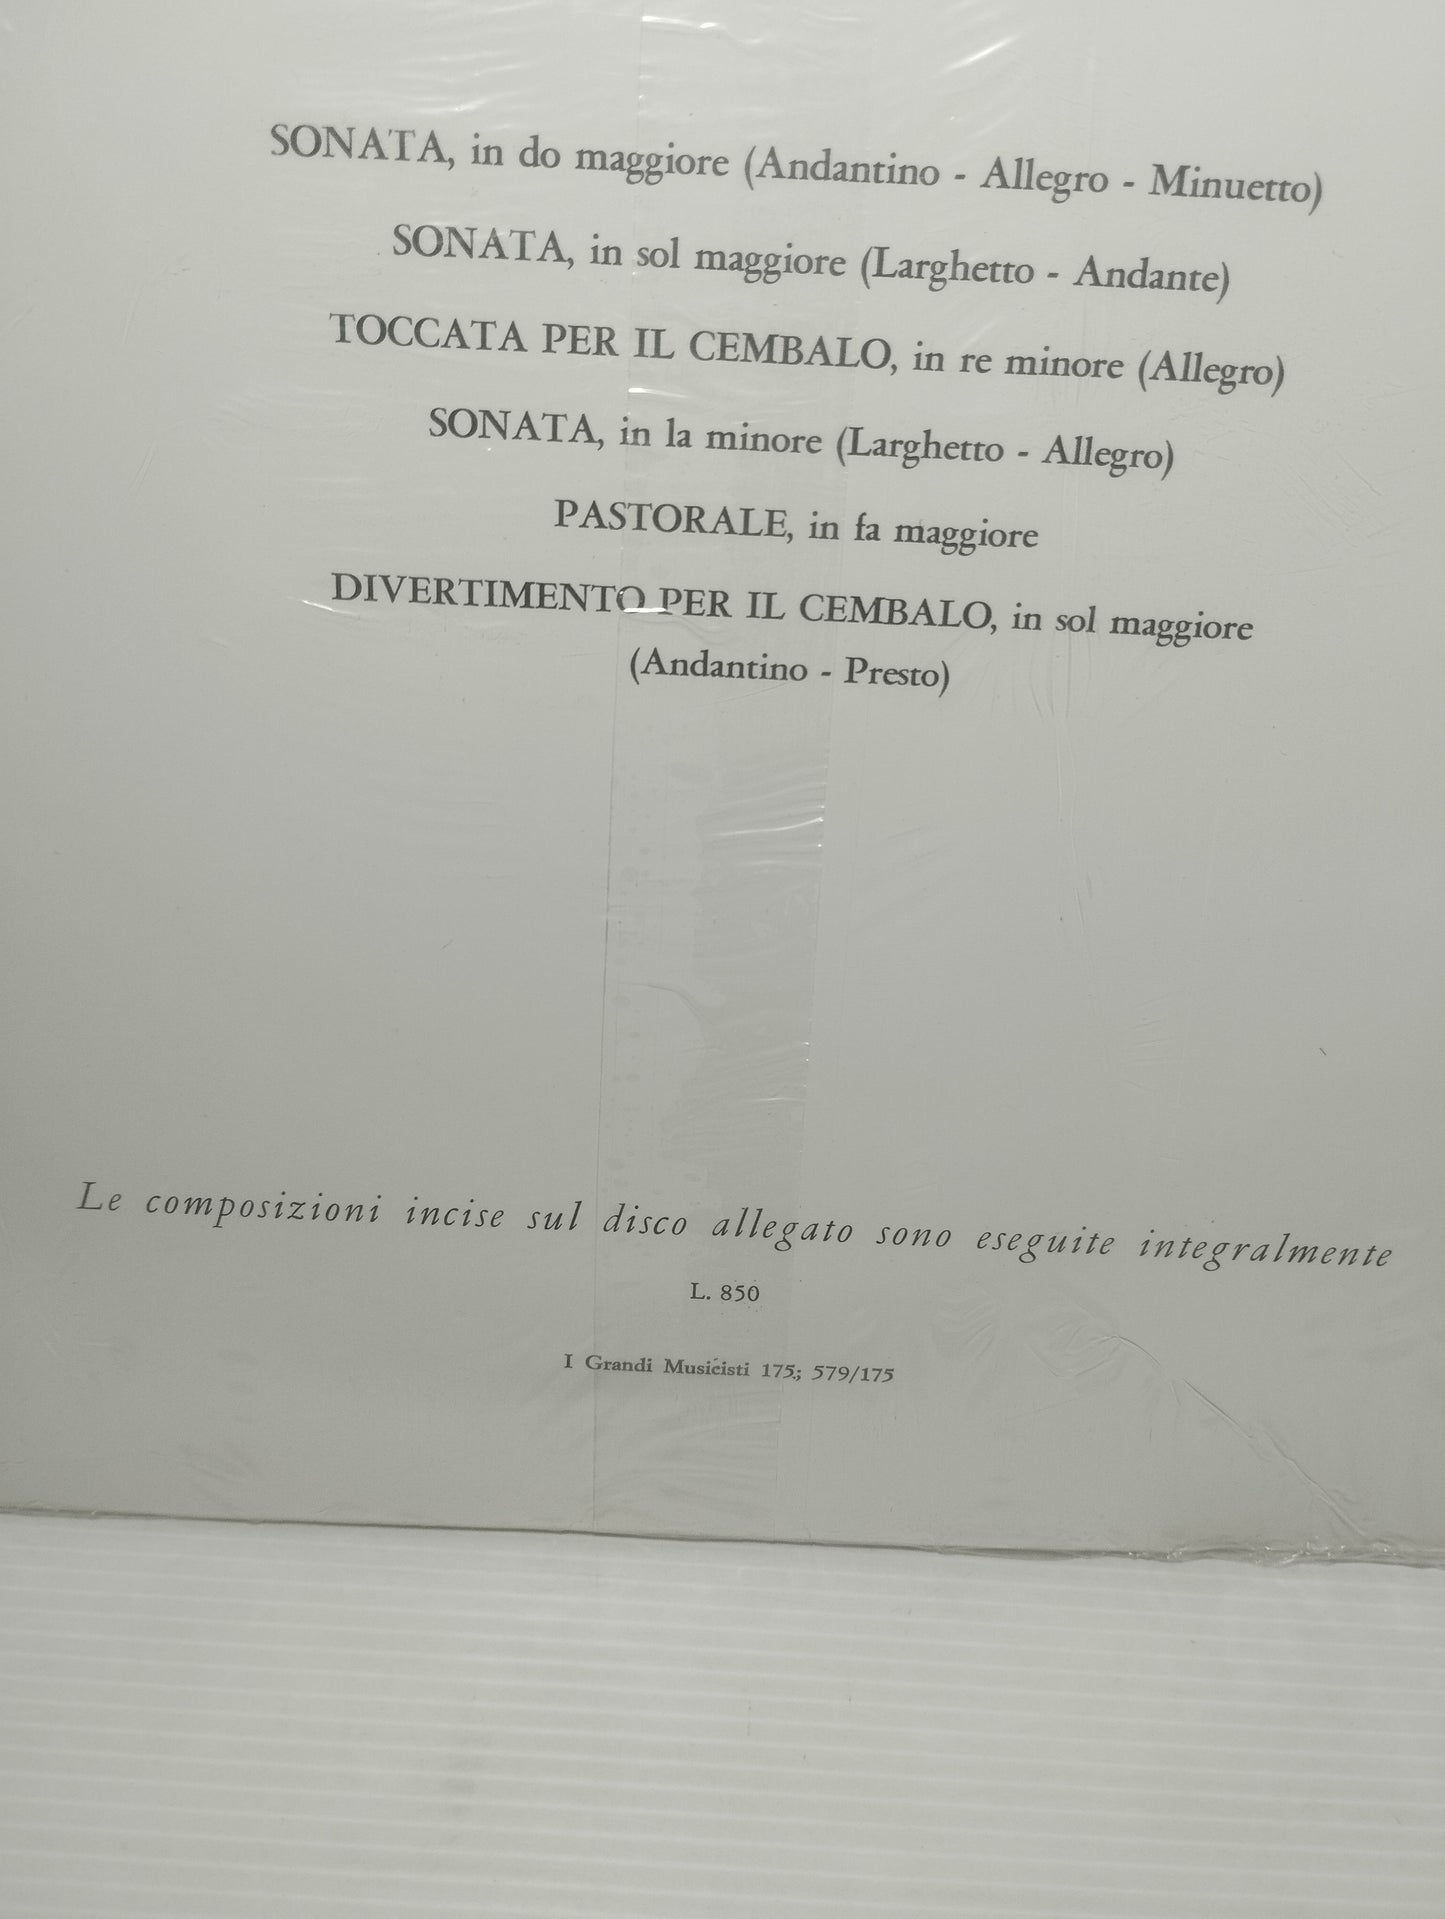 Baldassare Galuppi Vinile 10" 33 giri
I Grandi Musicisti Fratelli Fabbri Editori n.175
Anni 60 sigillato